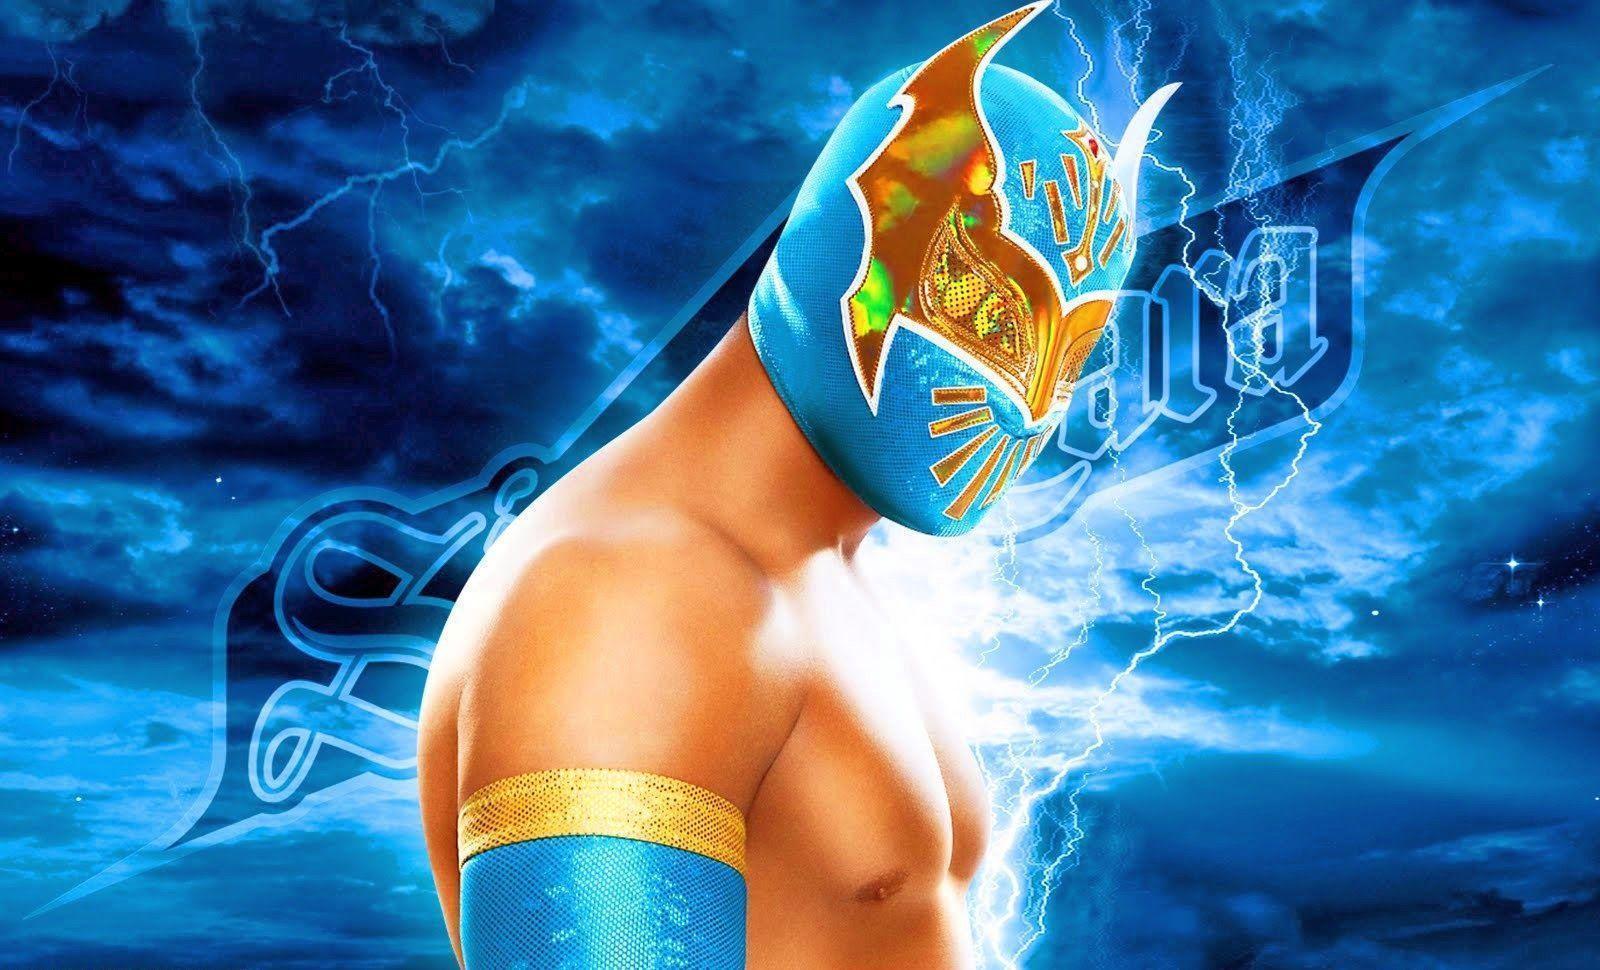 WWE HD Wallpapers Free: Sin Cara Hd Wallpapers Free Download.